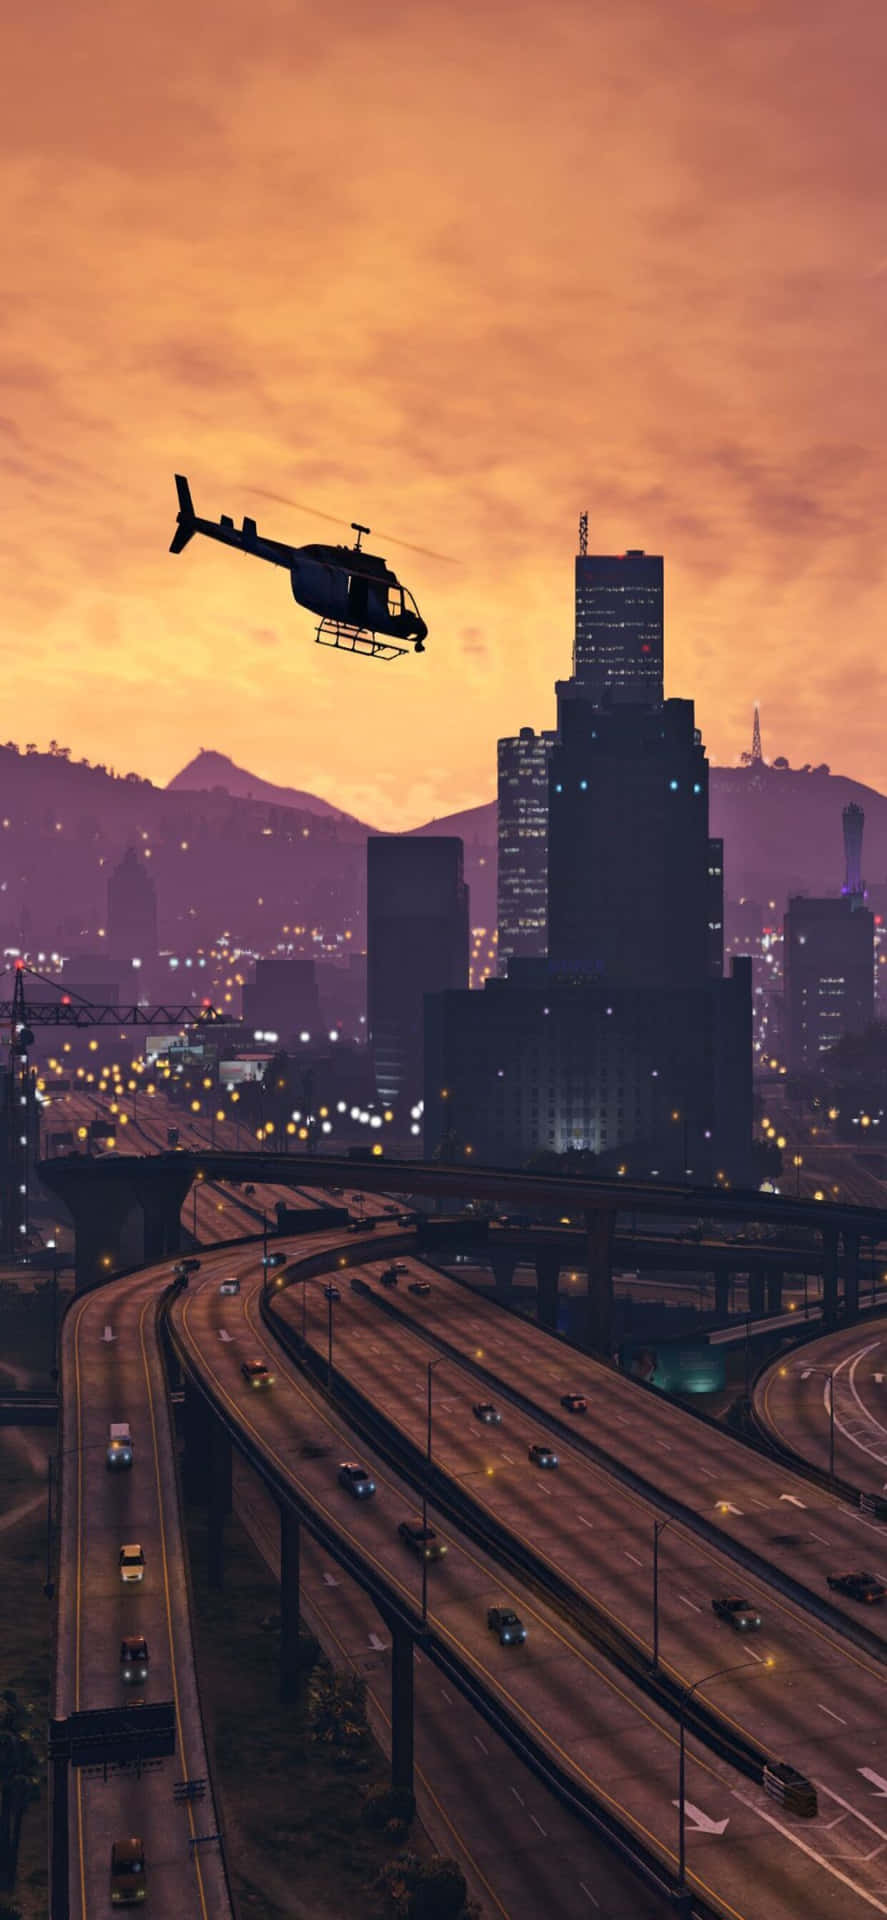 Fondode Pantalla De Grand Theft Auto V Para Iphone Xs Max, Con Un Helicóptero Volando Alrededor De La Autopista.